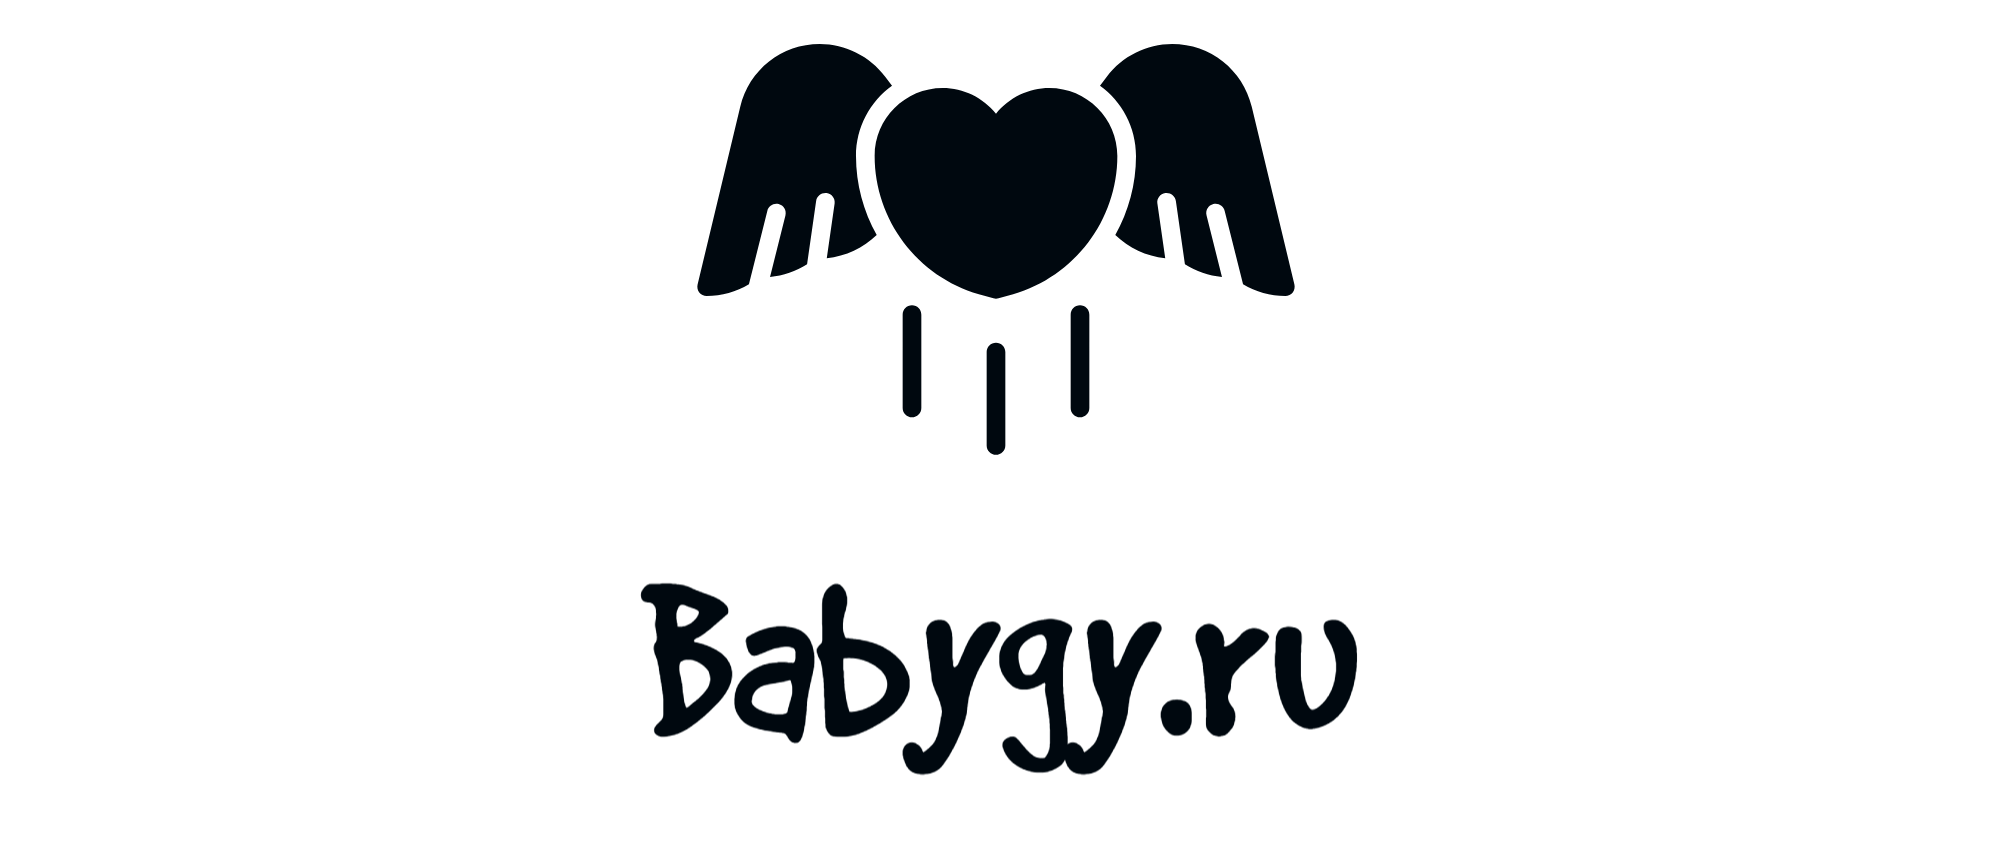 Babygy.ru